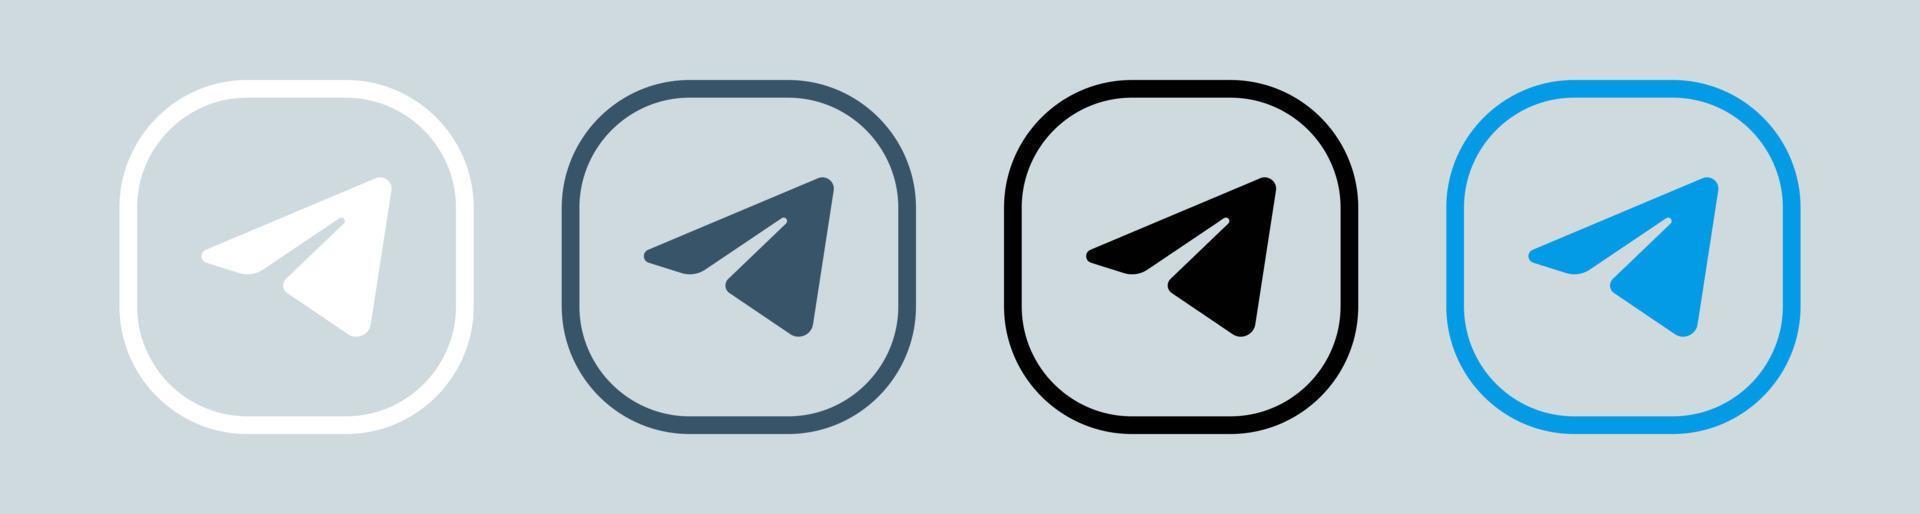 Telegramm-Logo in quadratischer Linie. beliebte Messaging-App-Logo-Vektorillustration. vektor